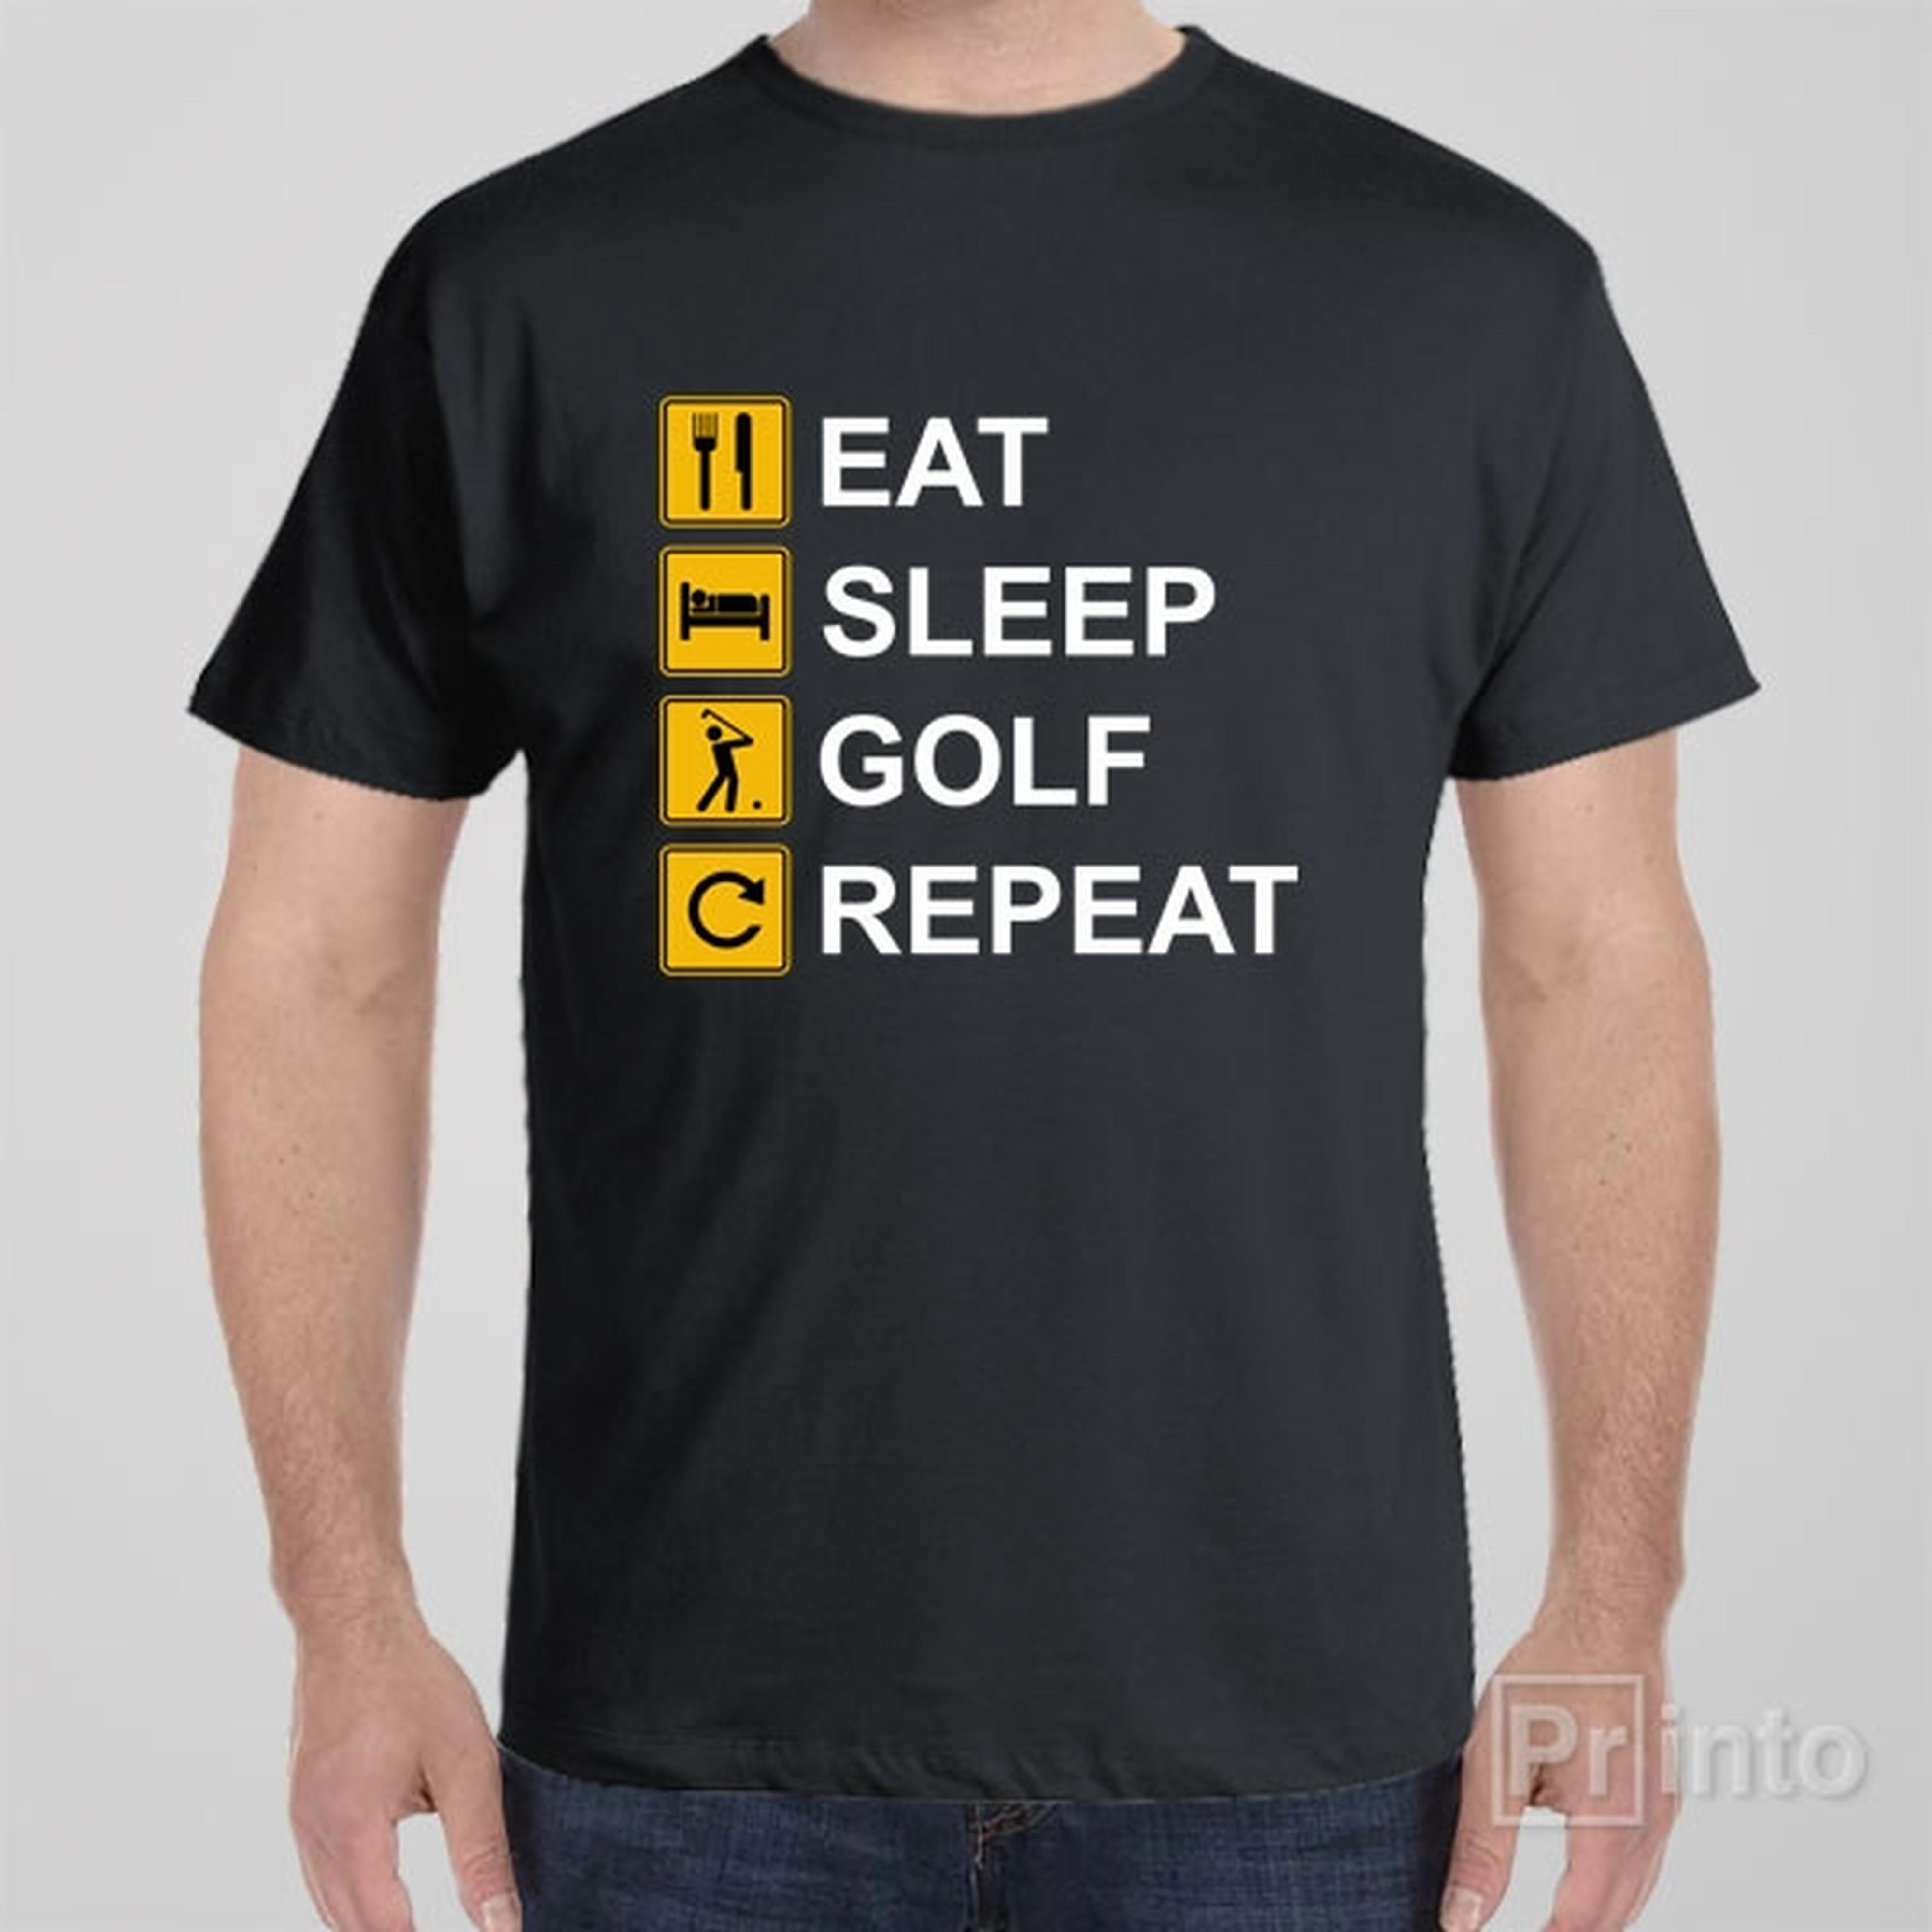 eat-sleep-golf-repeat-t-shirt